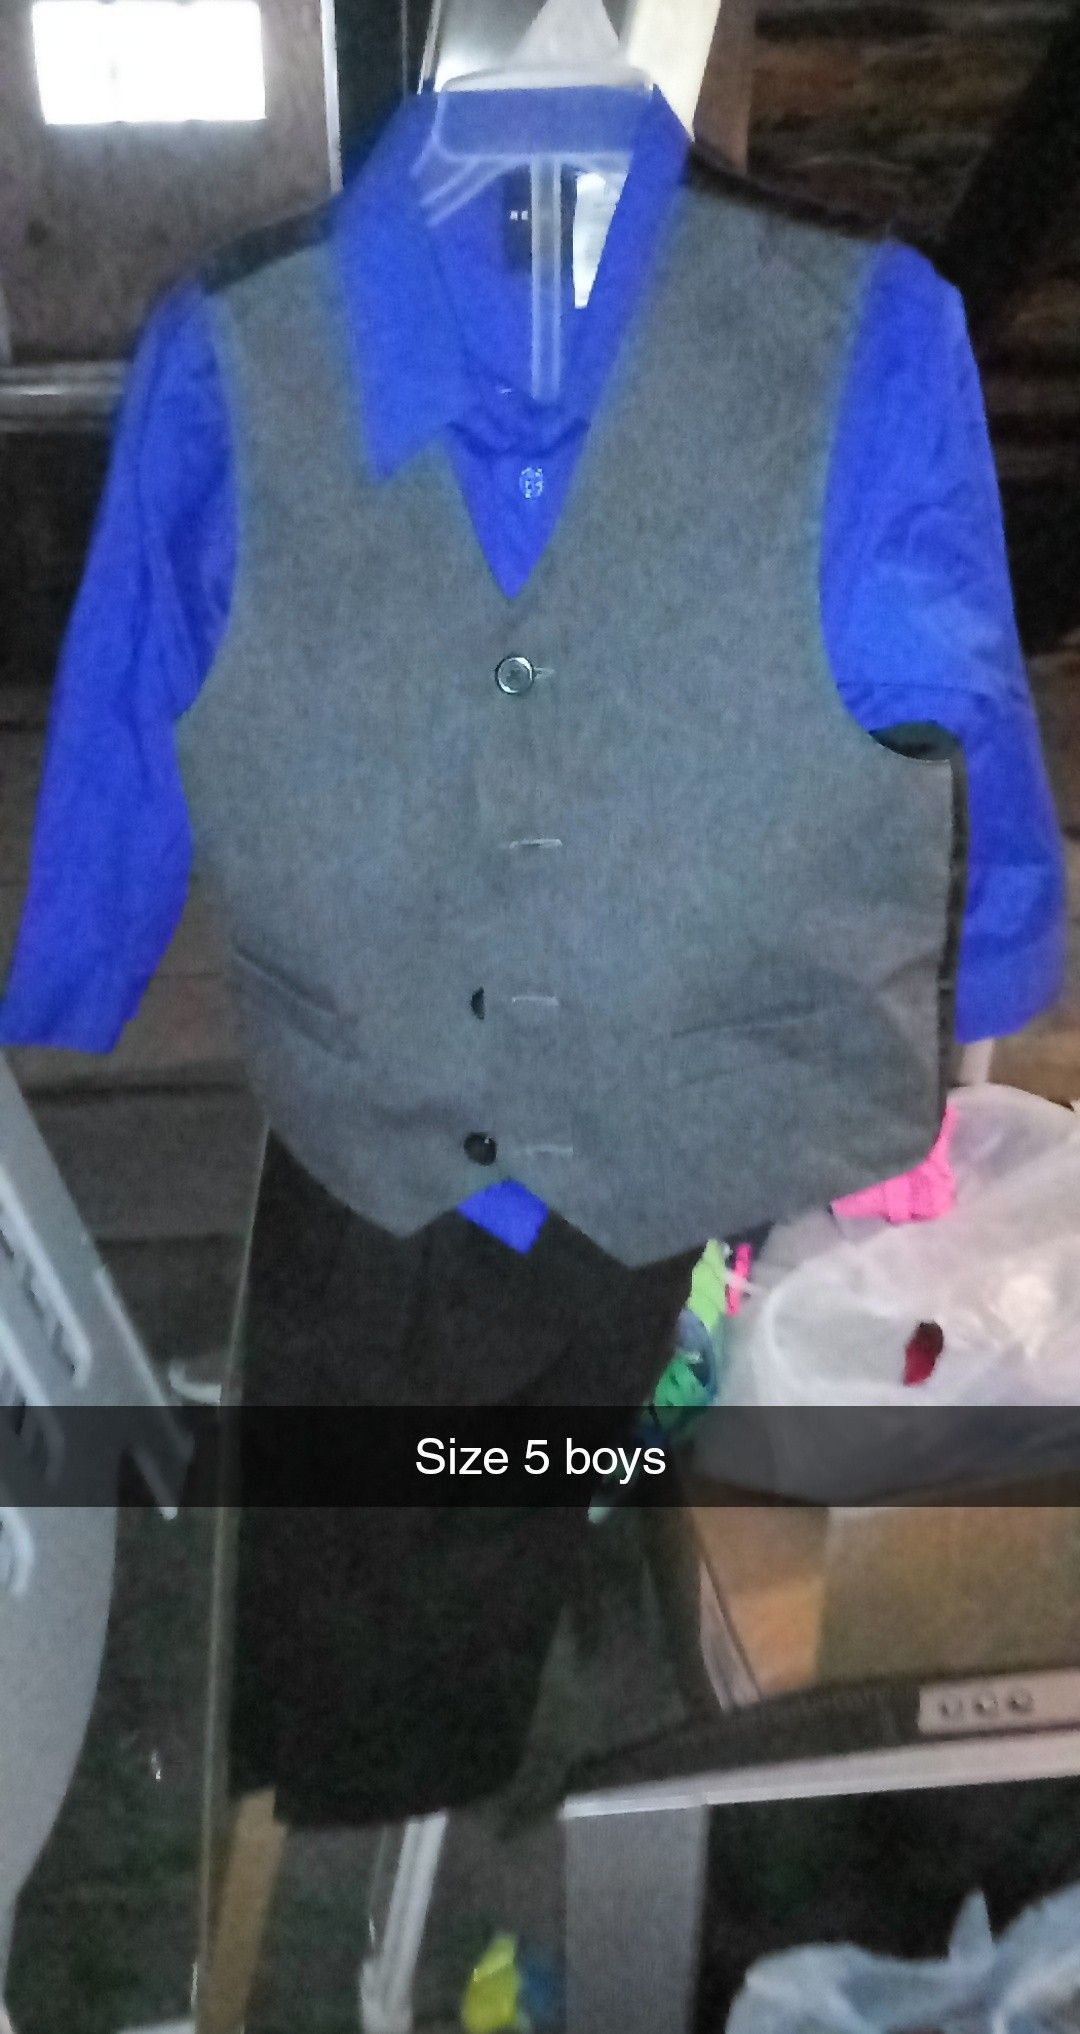 Size 5 boys dress up clothes